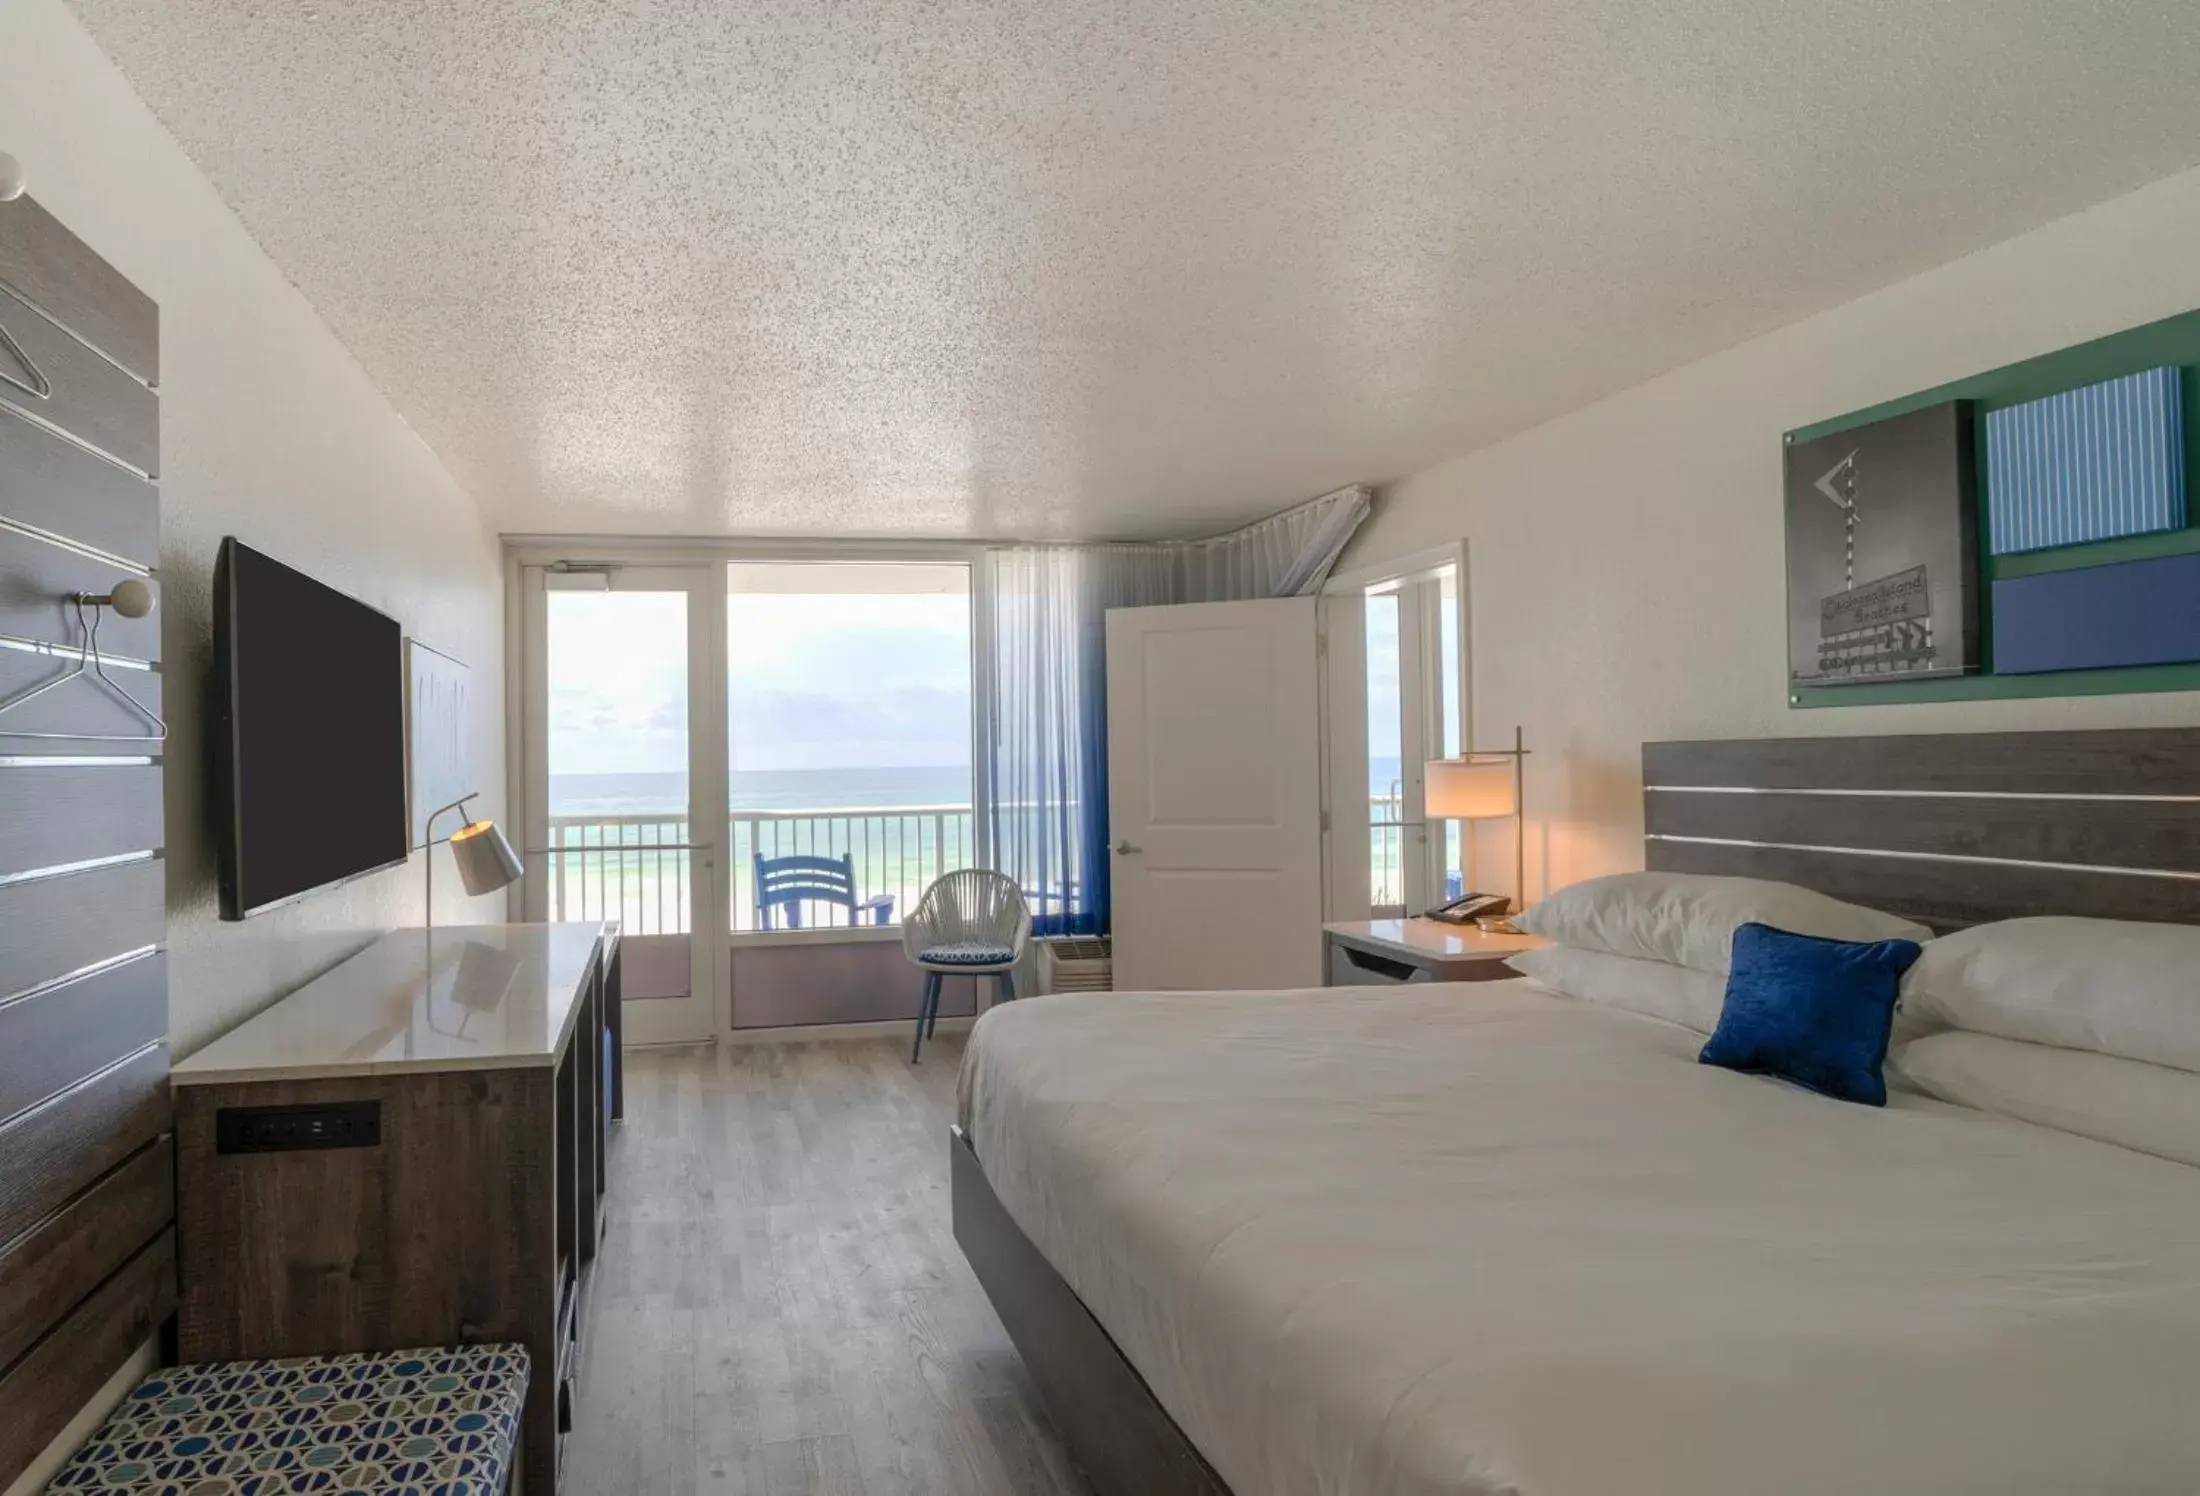 Bedroom in The Island Resort at Fort Walton Beach